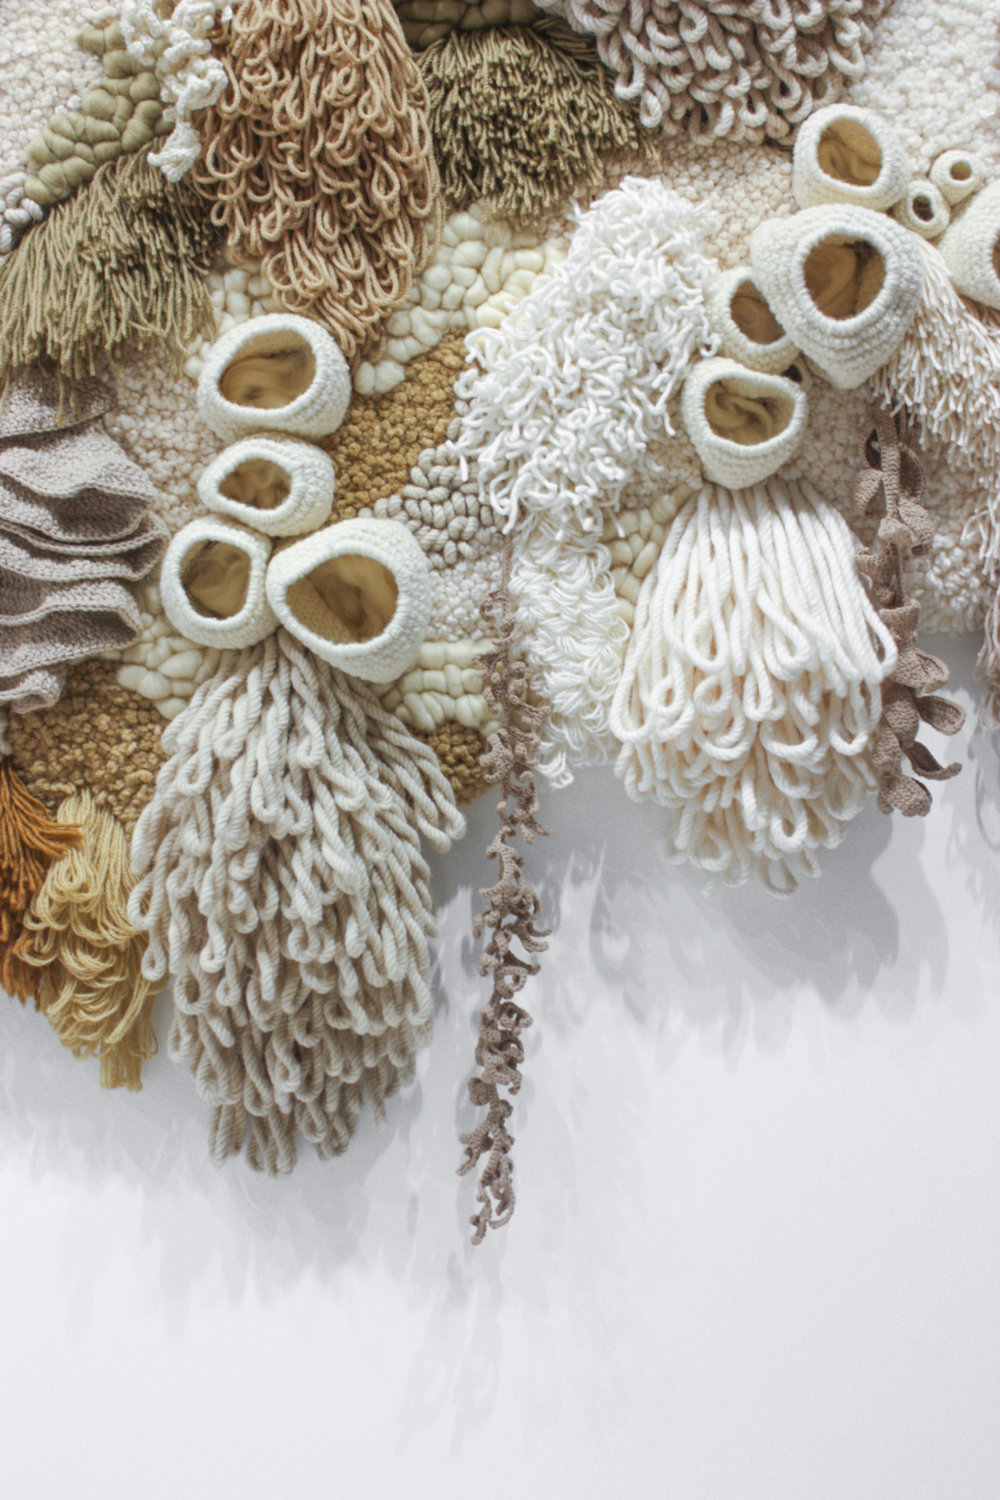 Coral Garden Stunning Installation Of Textile Coral Reefs By Vanessa Barragao 4